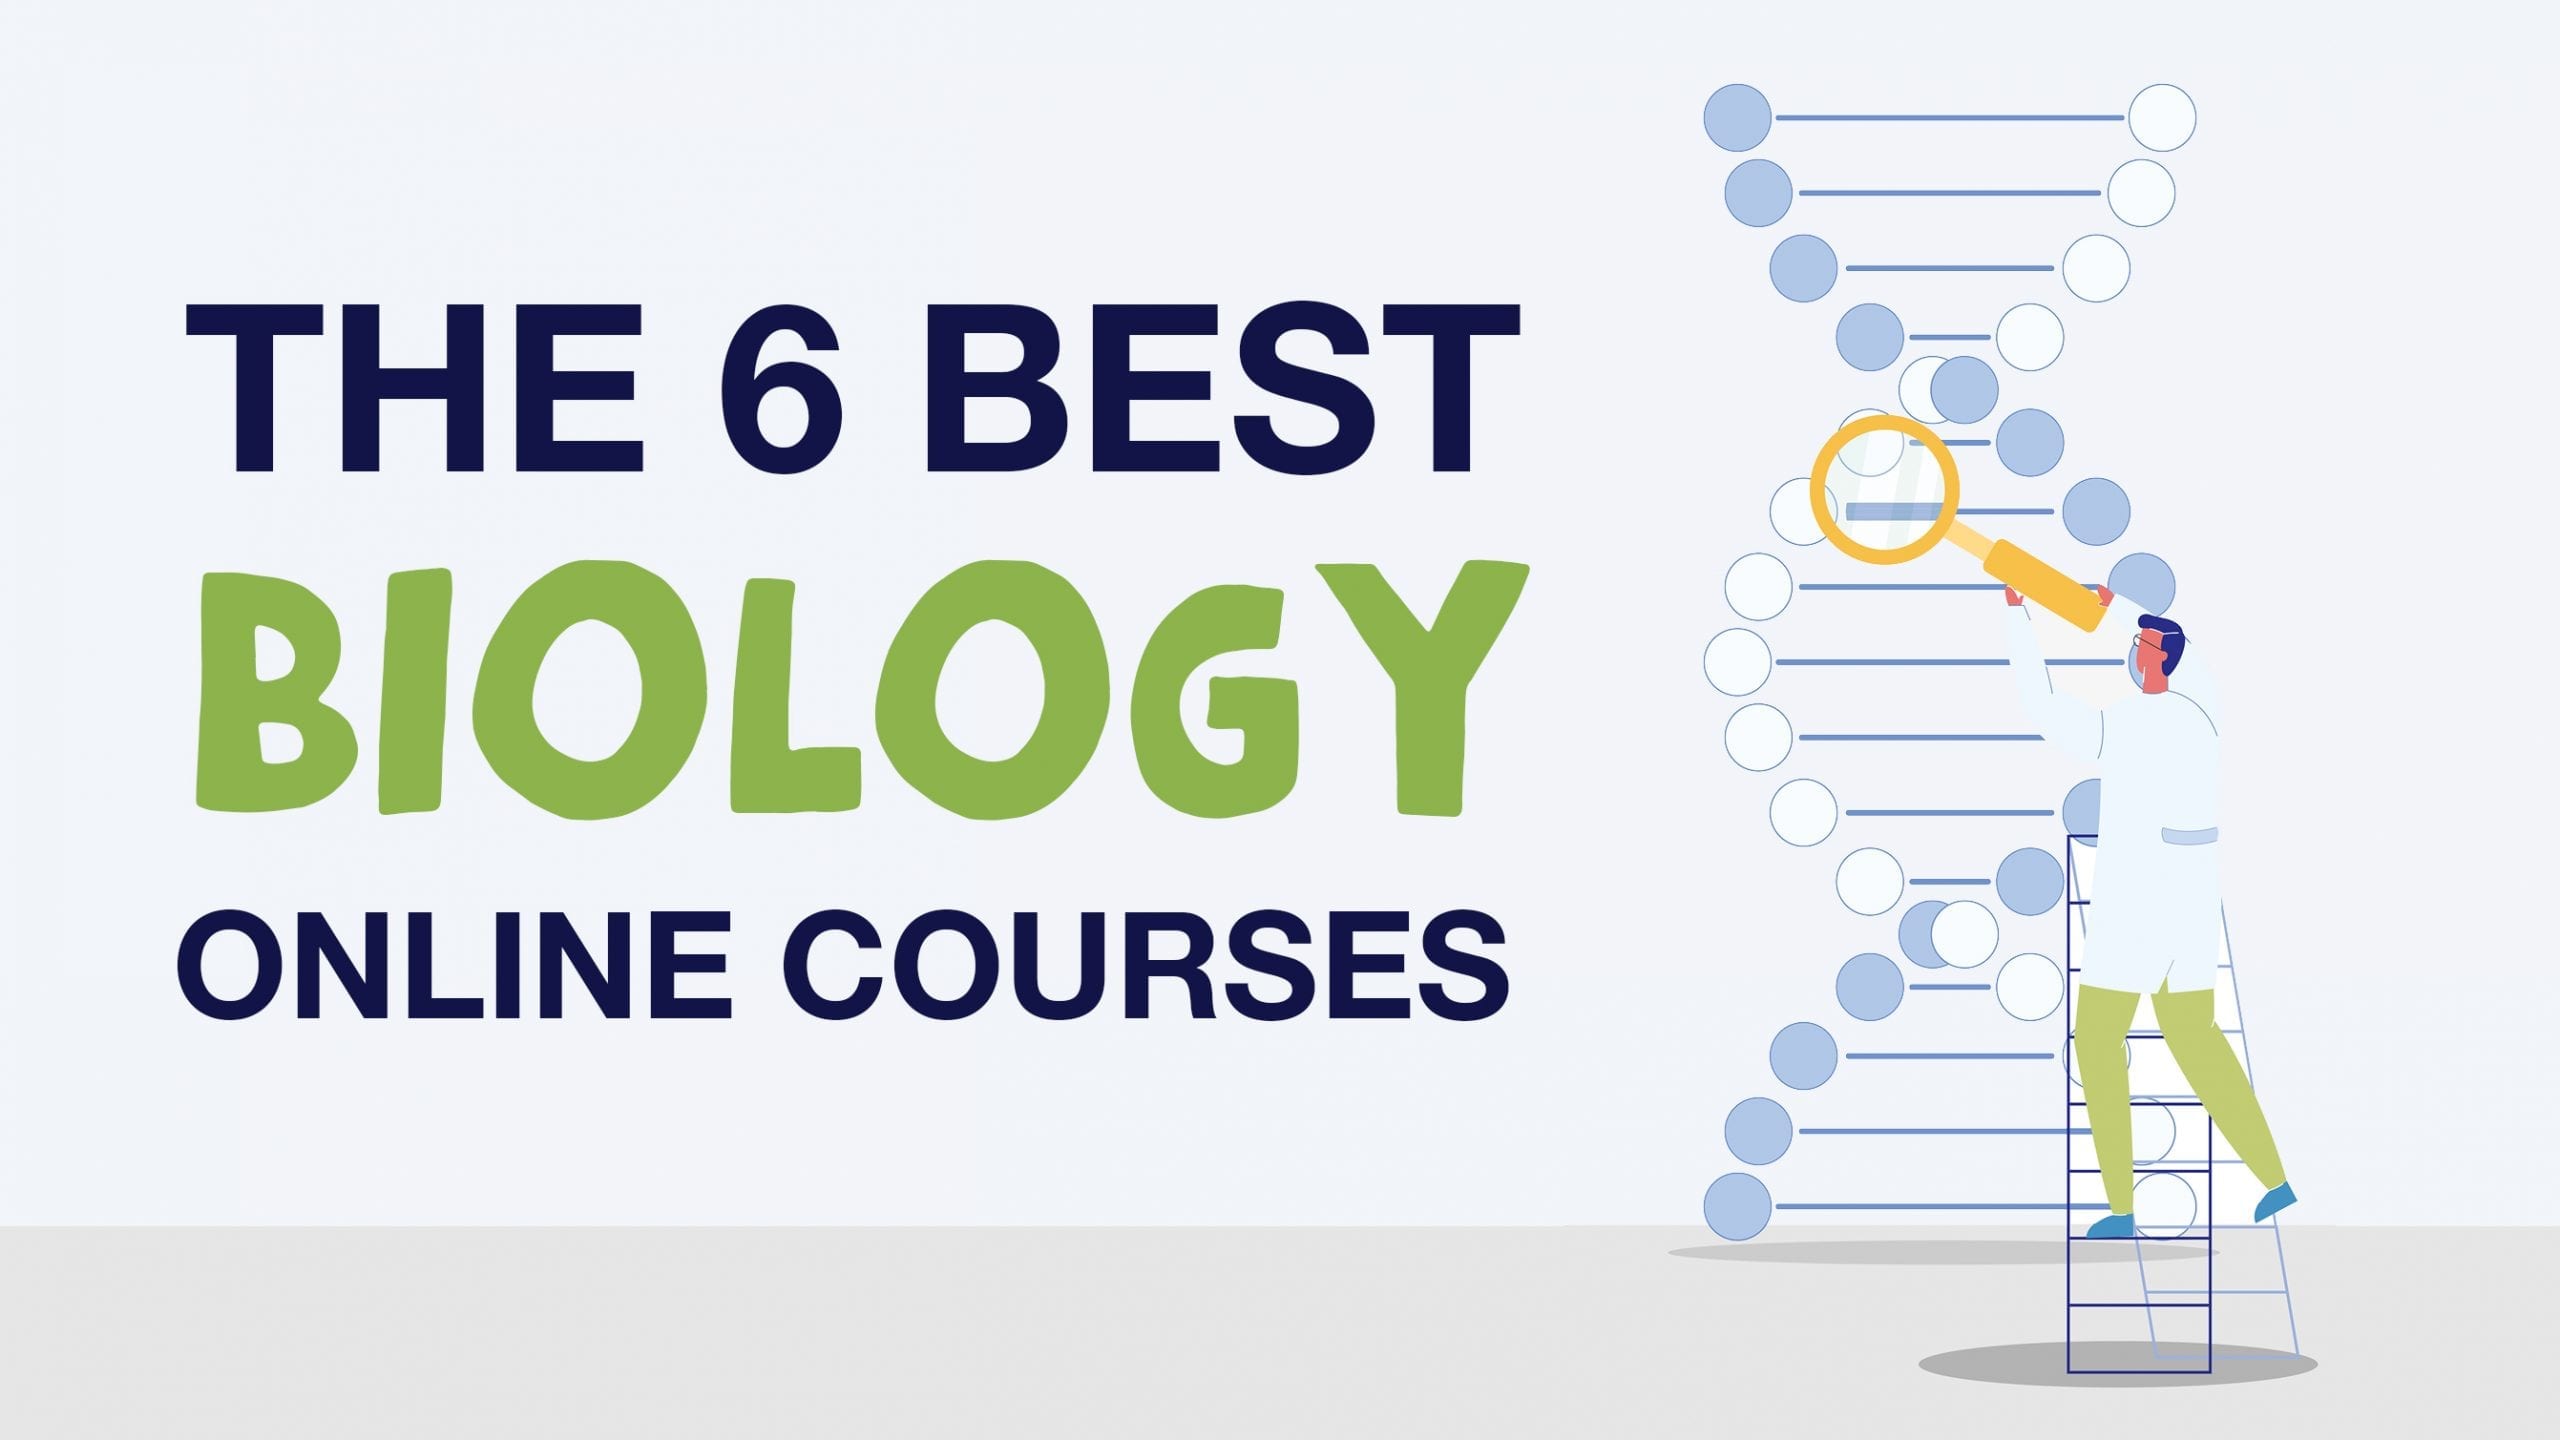 BIOLOGY Online Courses Feature 